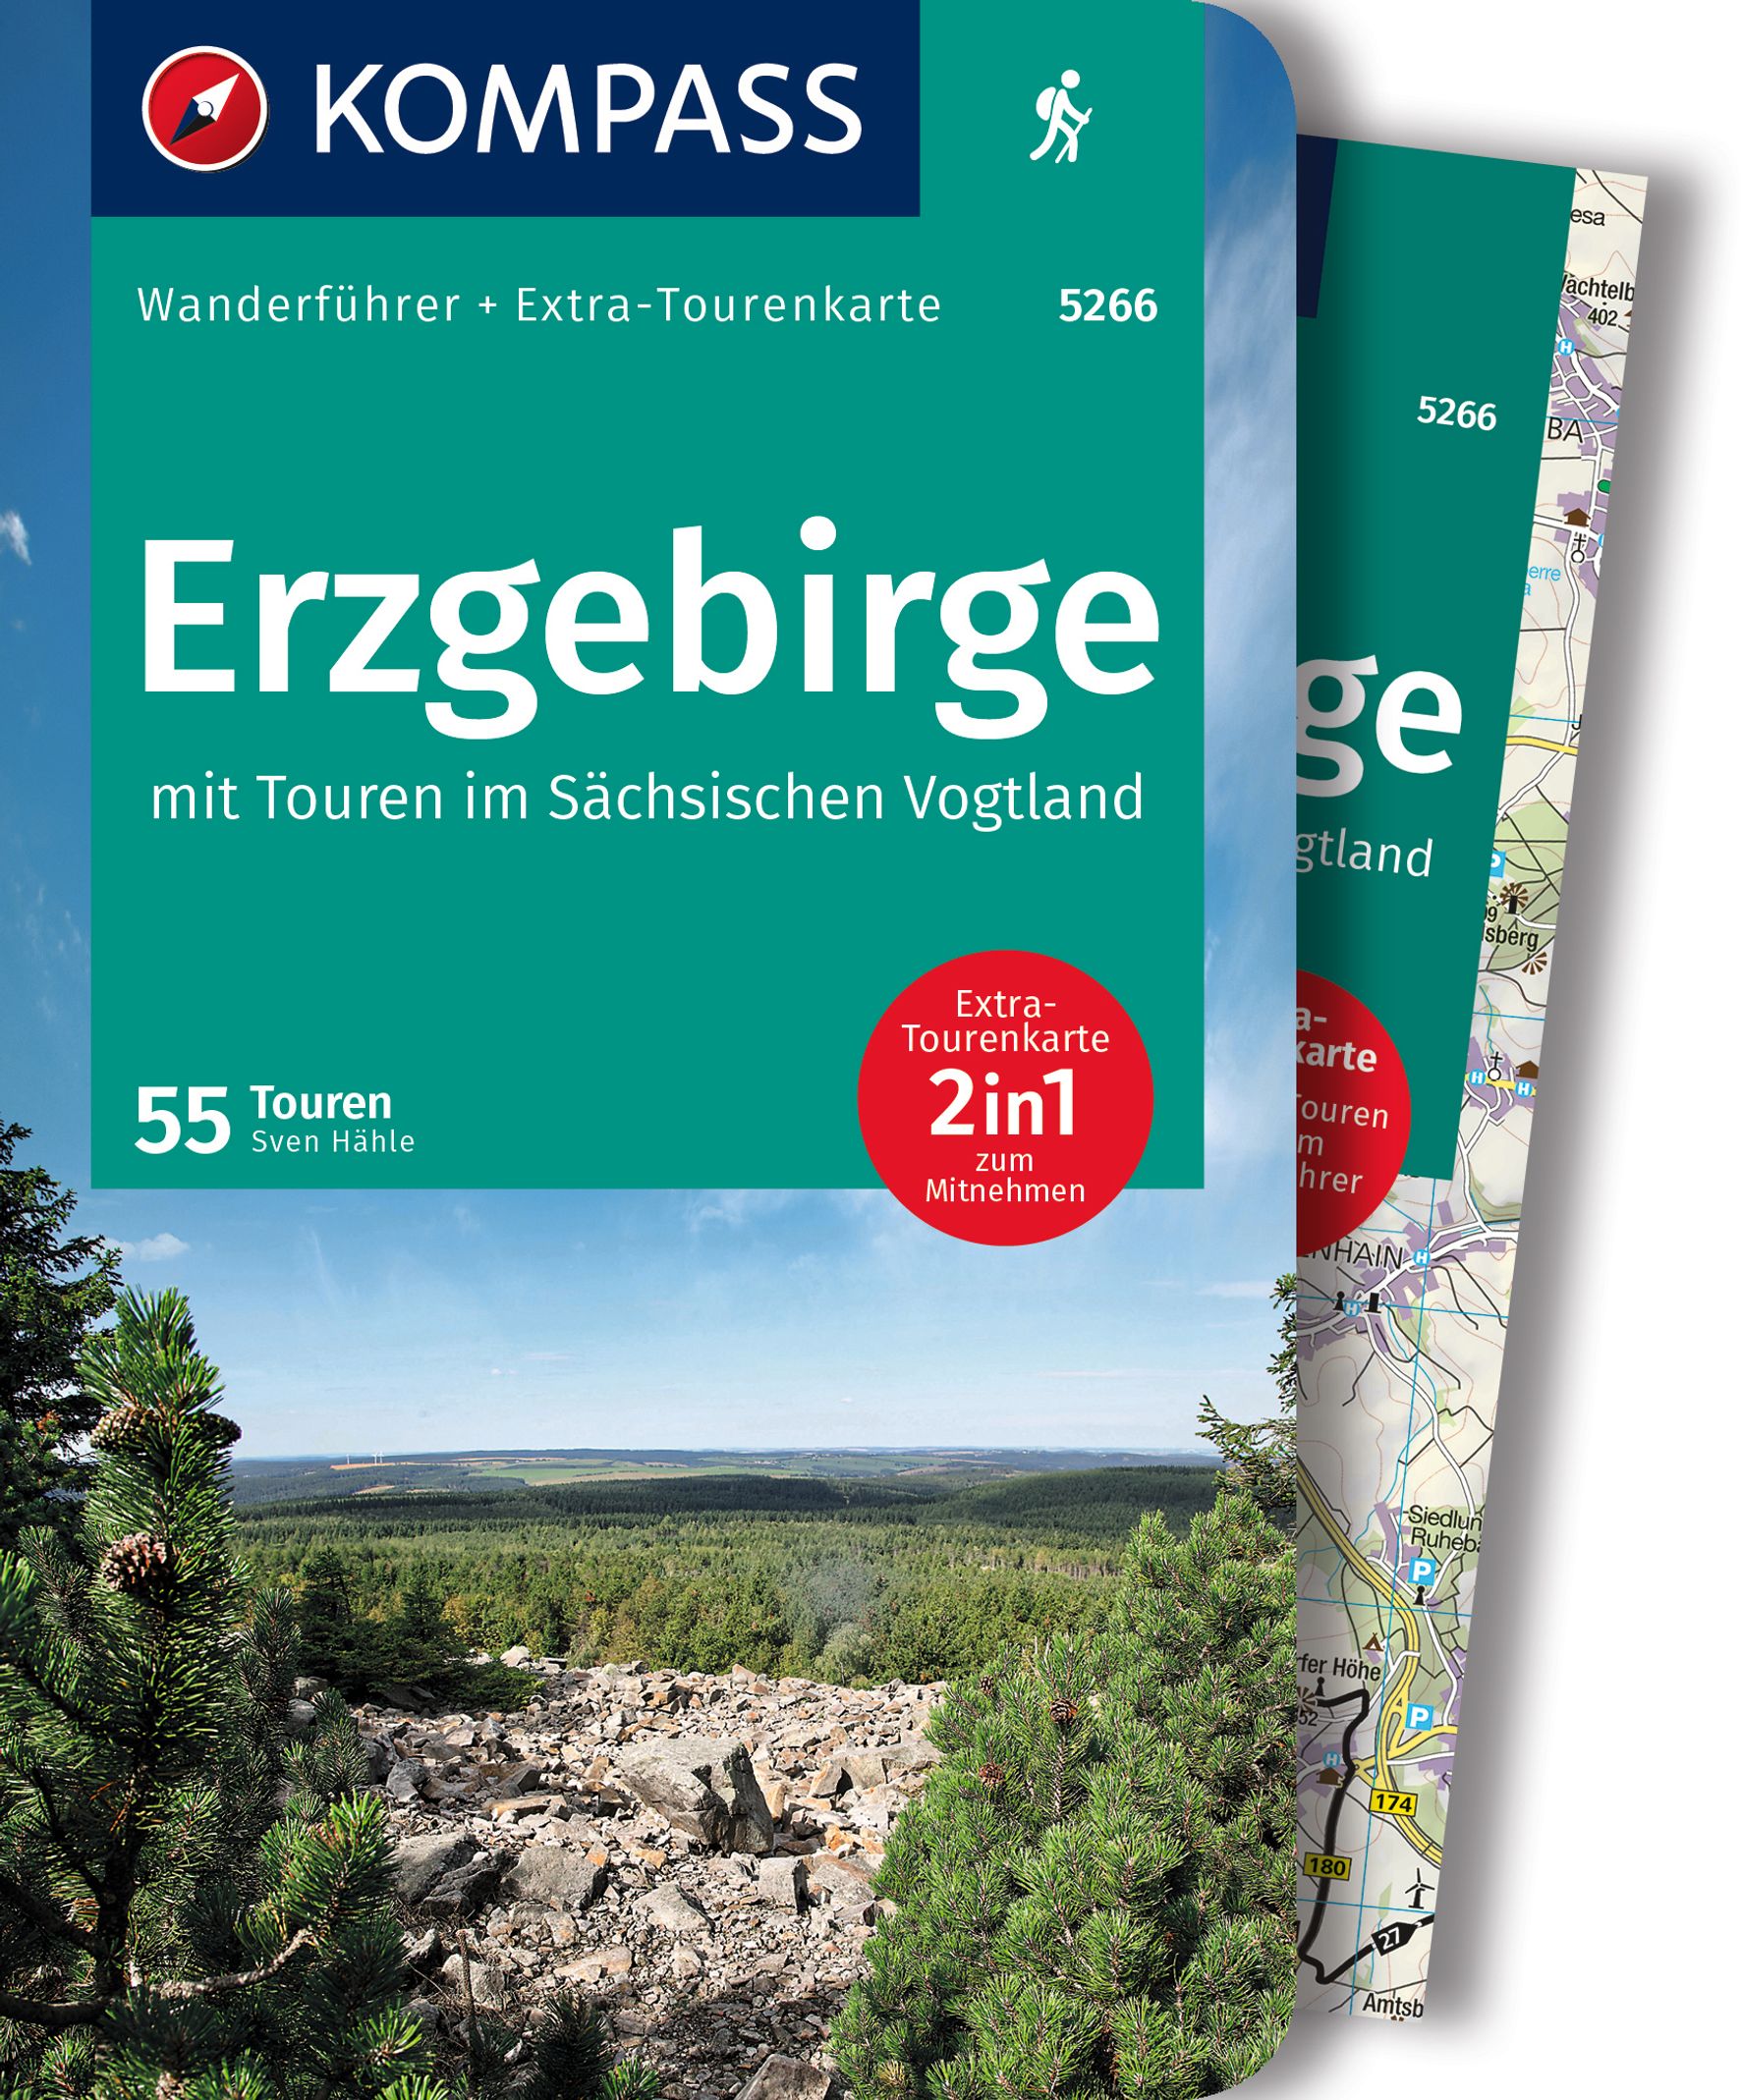 MAIRDUMONT Erzgebirge, 55 Touren mit Extra-Tourenkarte